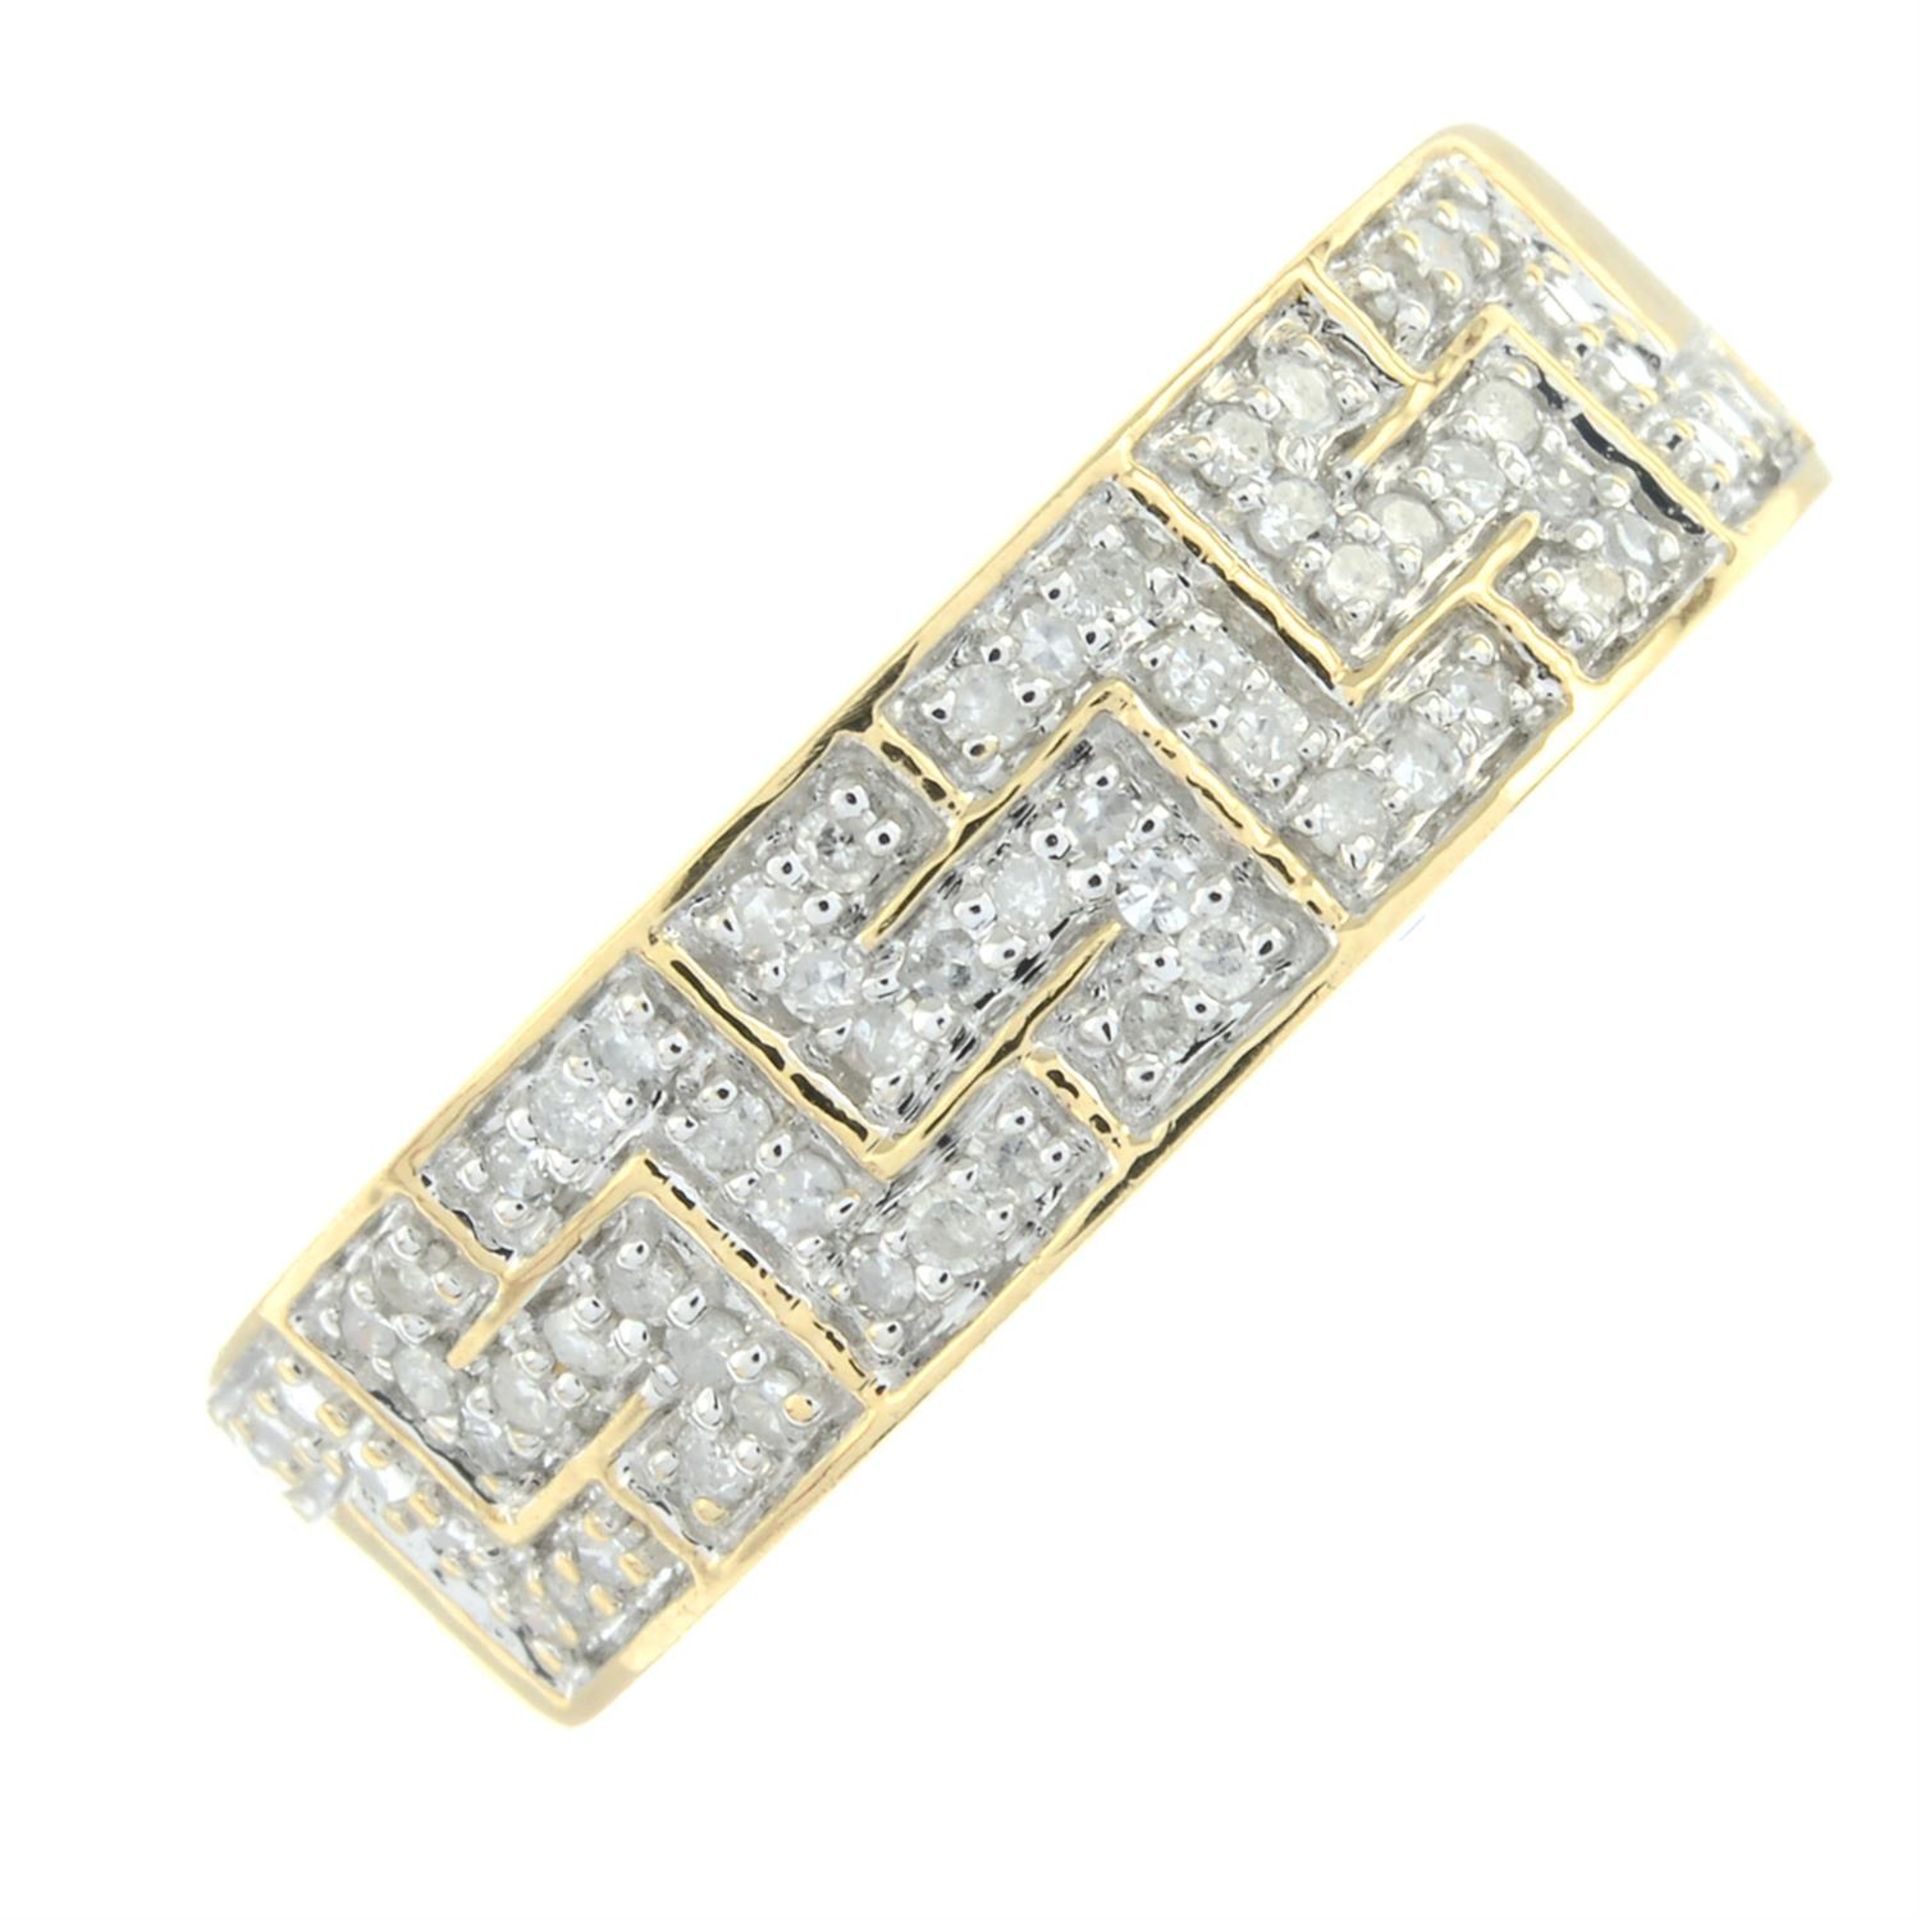 A 9ct gold pave-set diamond ring.